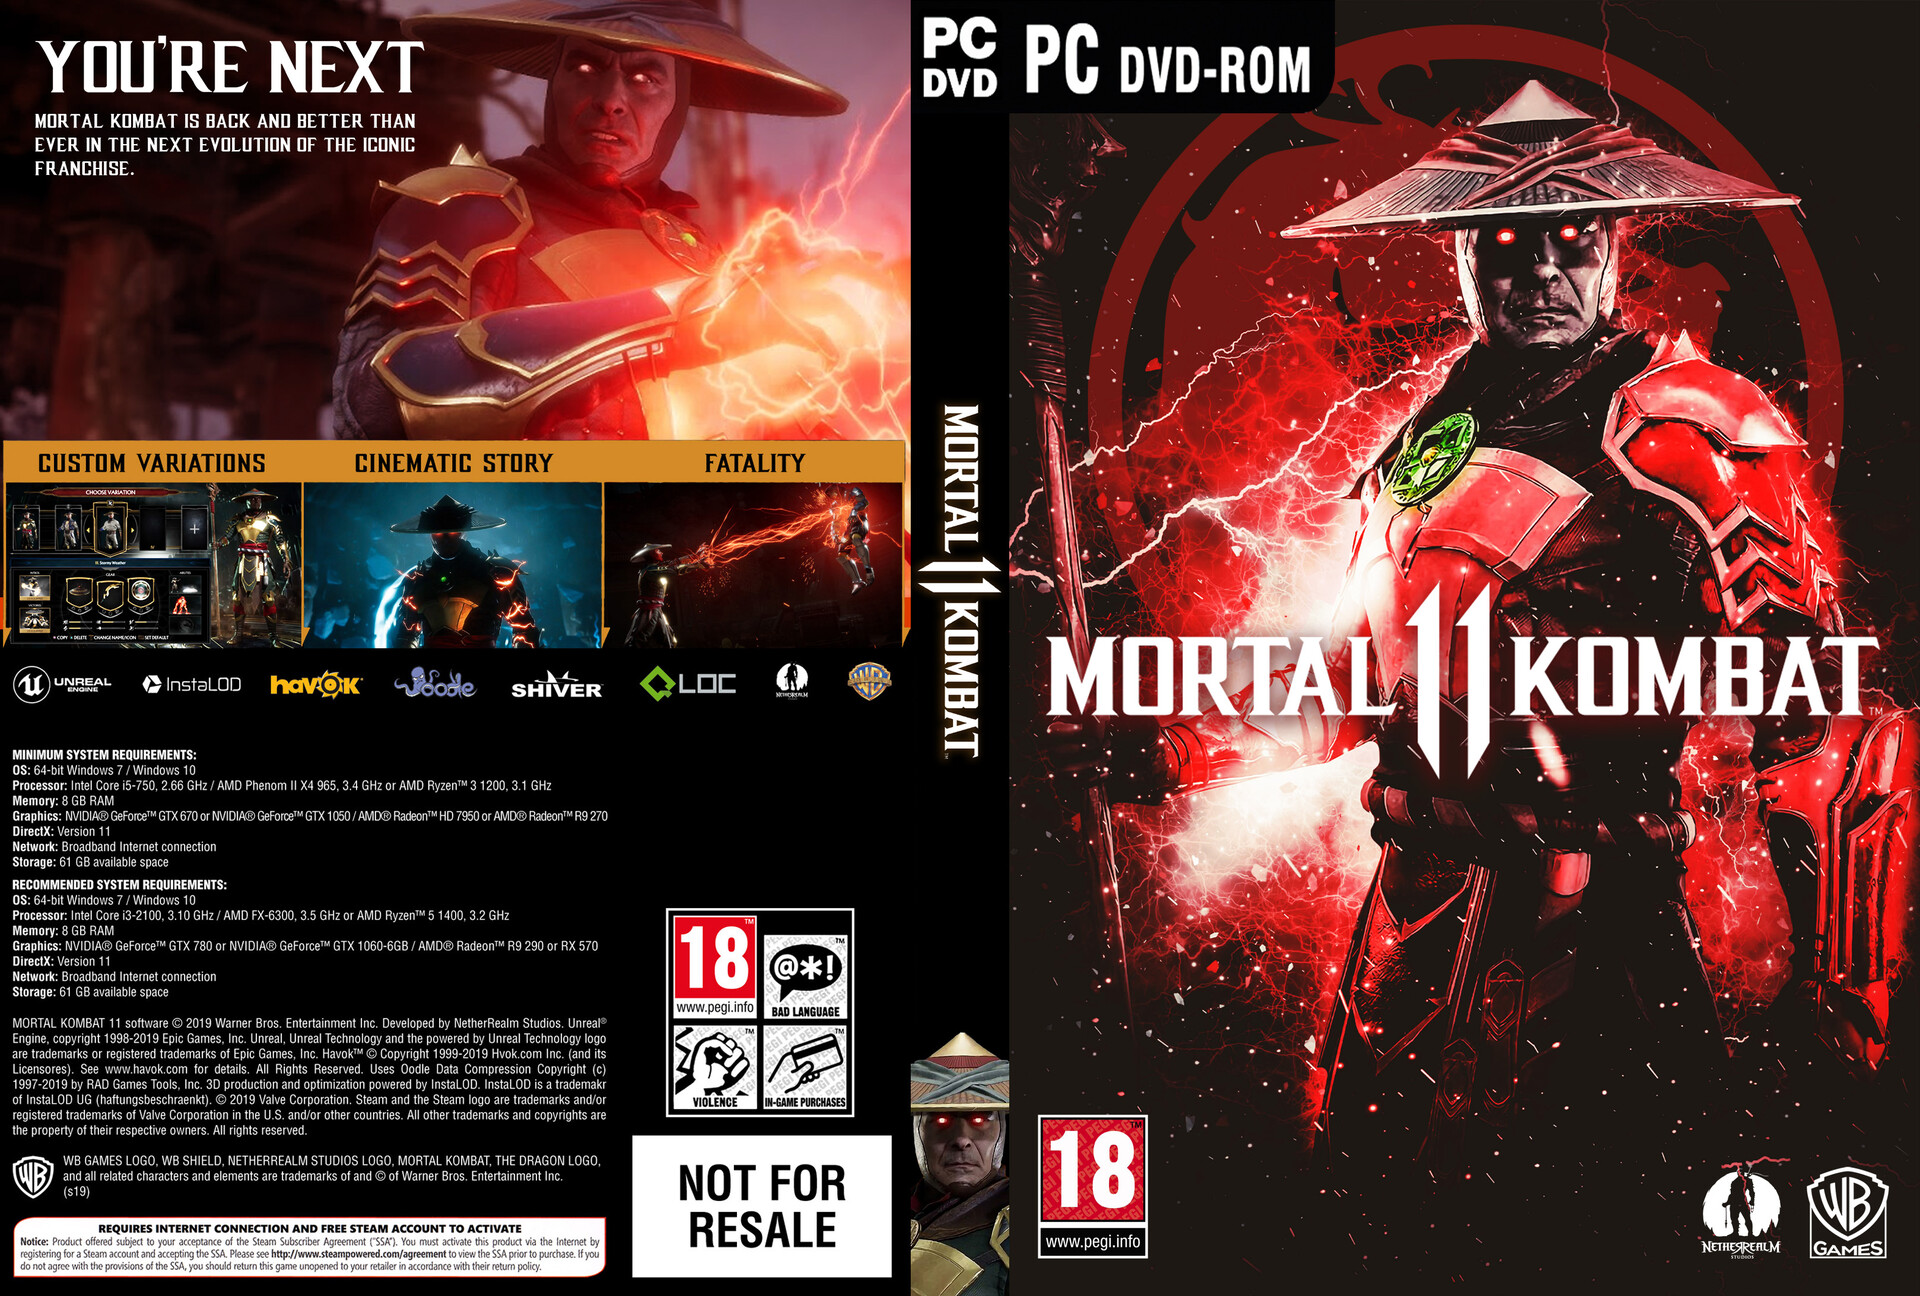 mdesign-digital-artwork-mortal-kombat-11-pc-dvd-cover-raiden